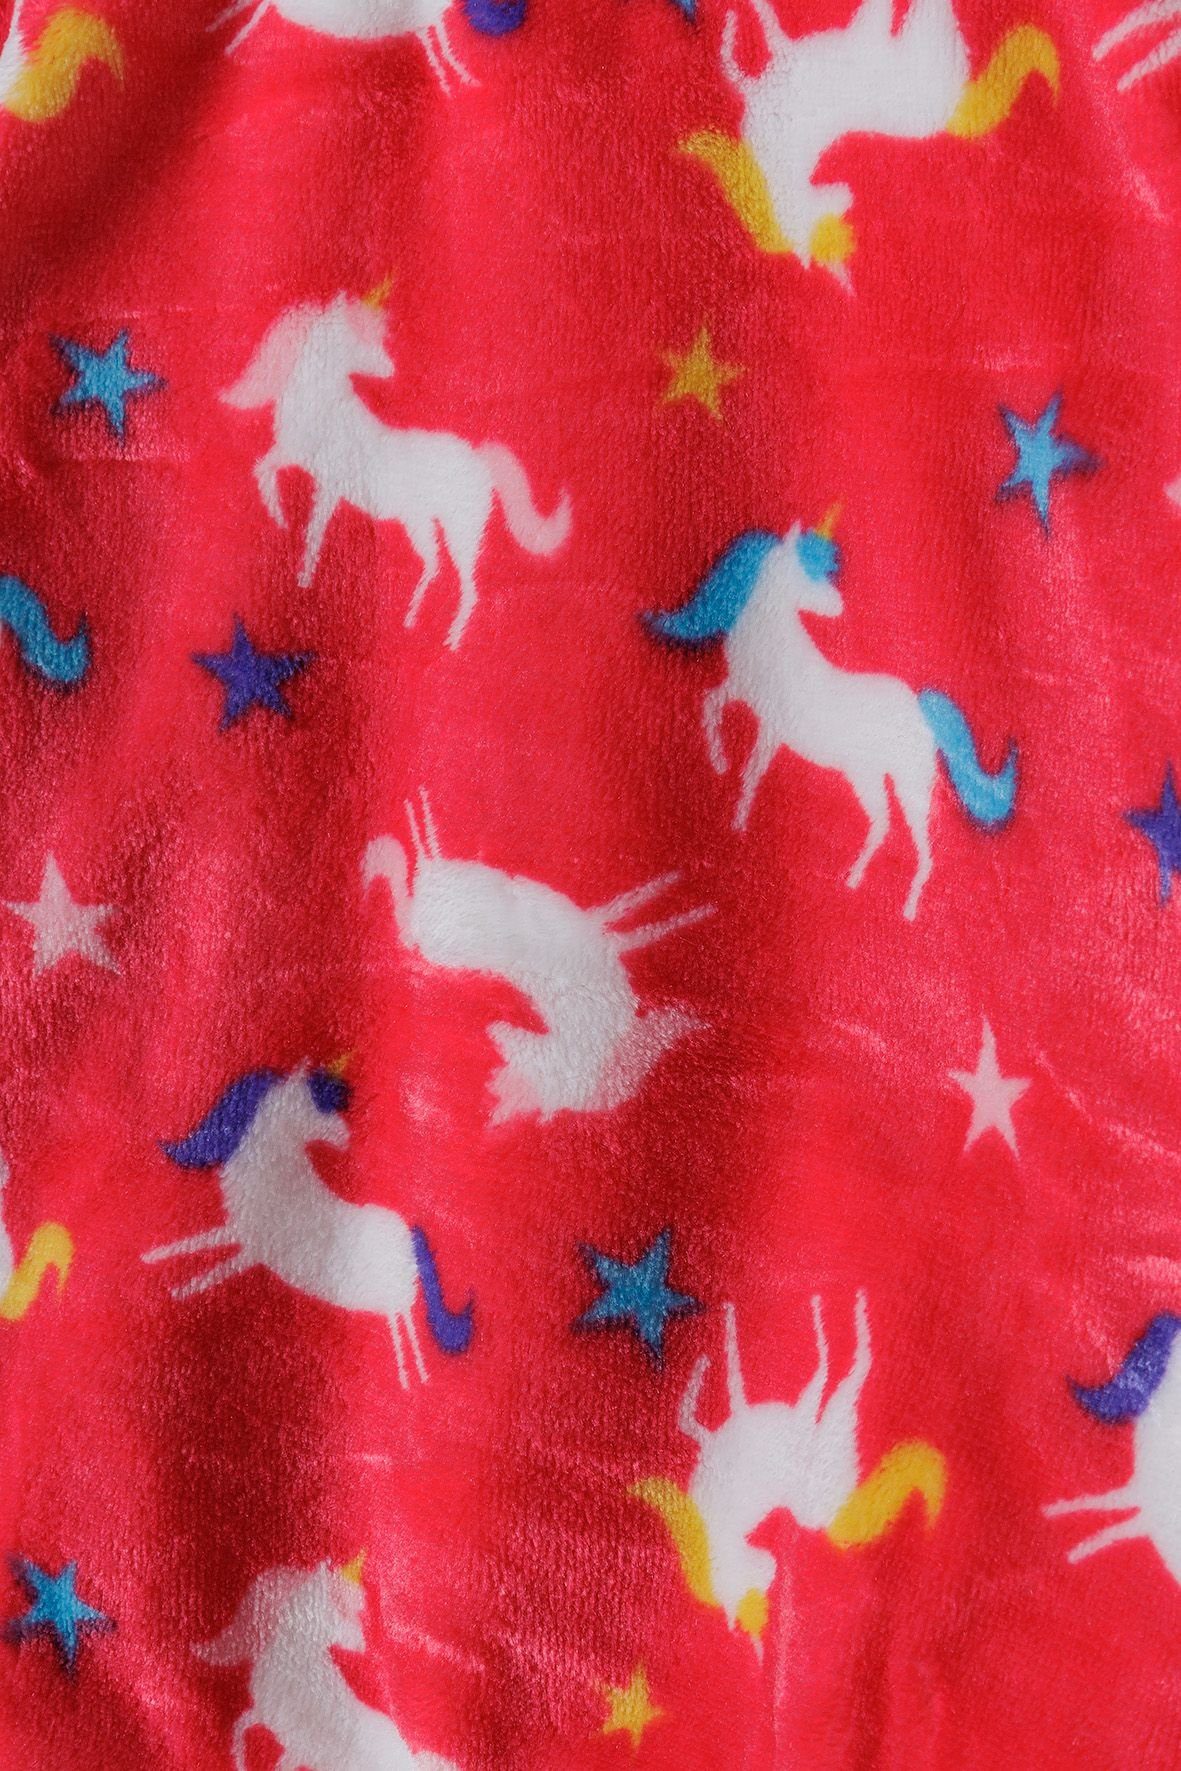 Neonrosa (1y-8y) Fleece MINOTI Schlafanzug-Set Pyjama kuscheligem aus